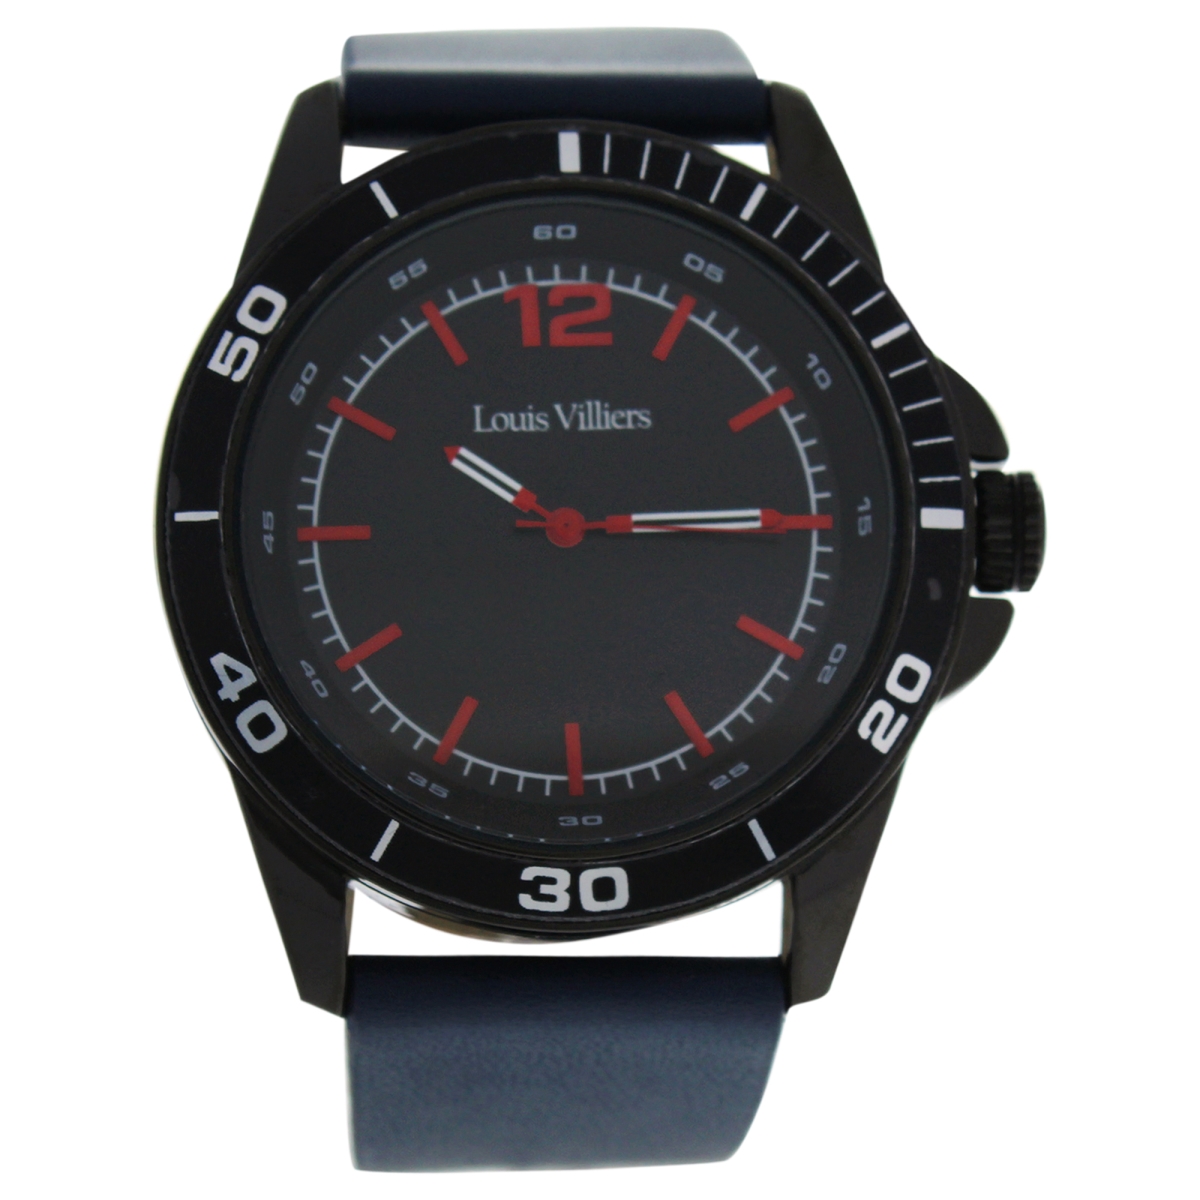 M-wat-1333 Lv1003 Leather Strap Watch For Men - Black & Blue